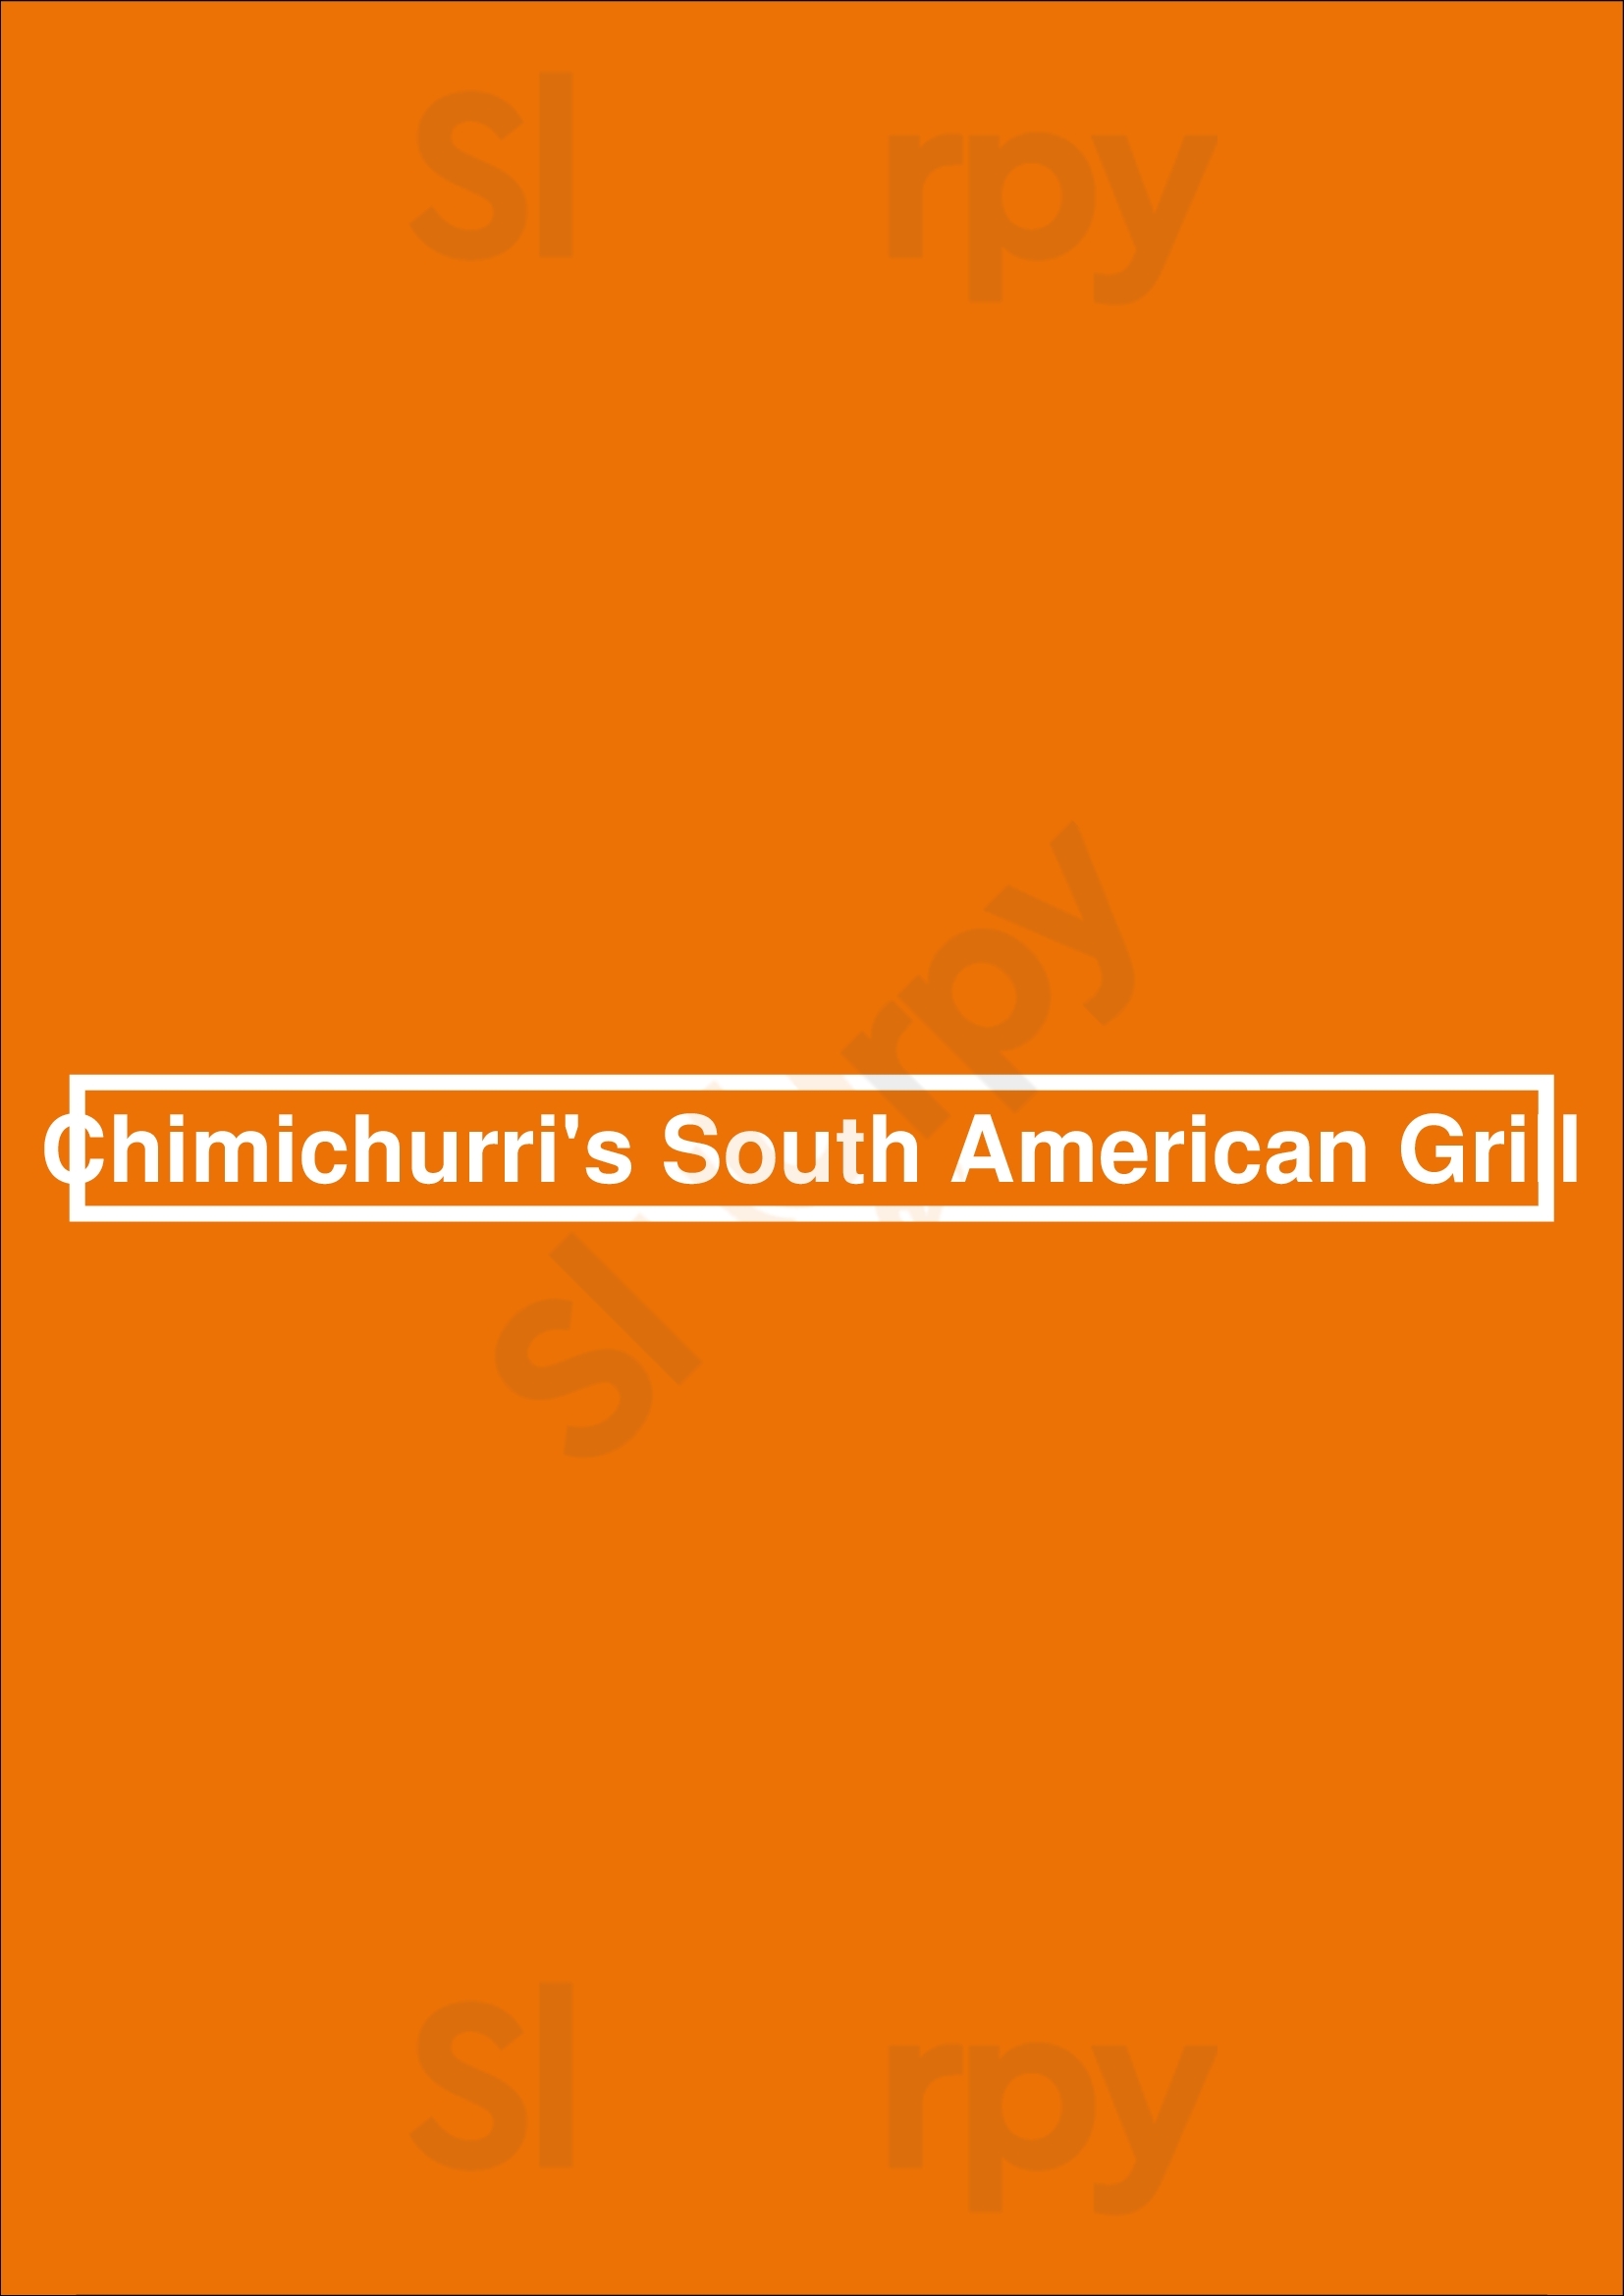 Chimichurri's South American Grill Houston Menu - 1